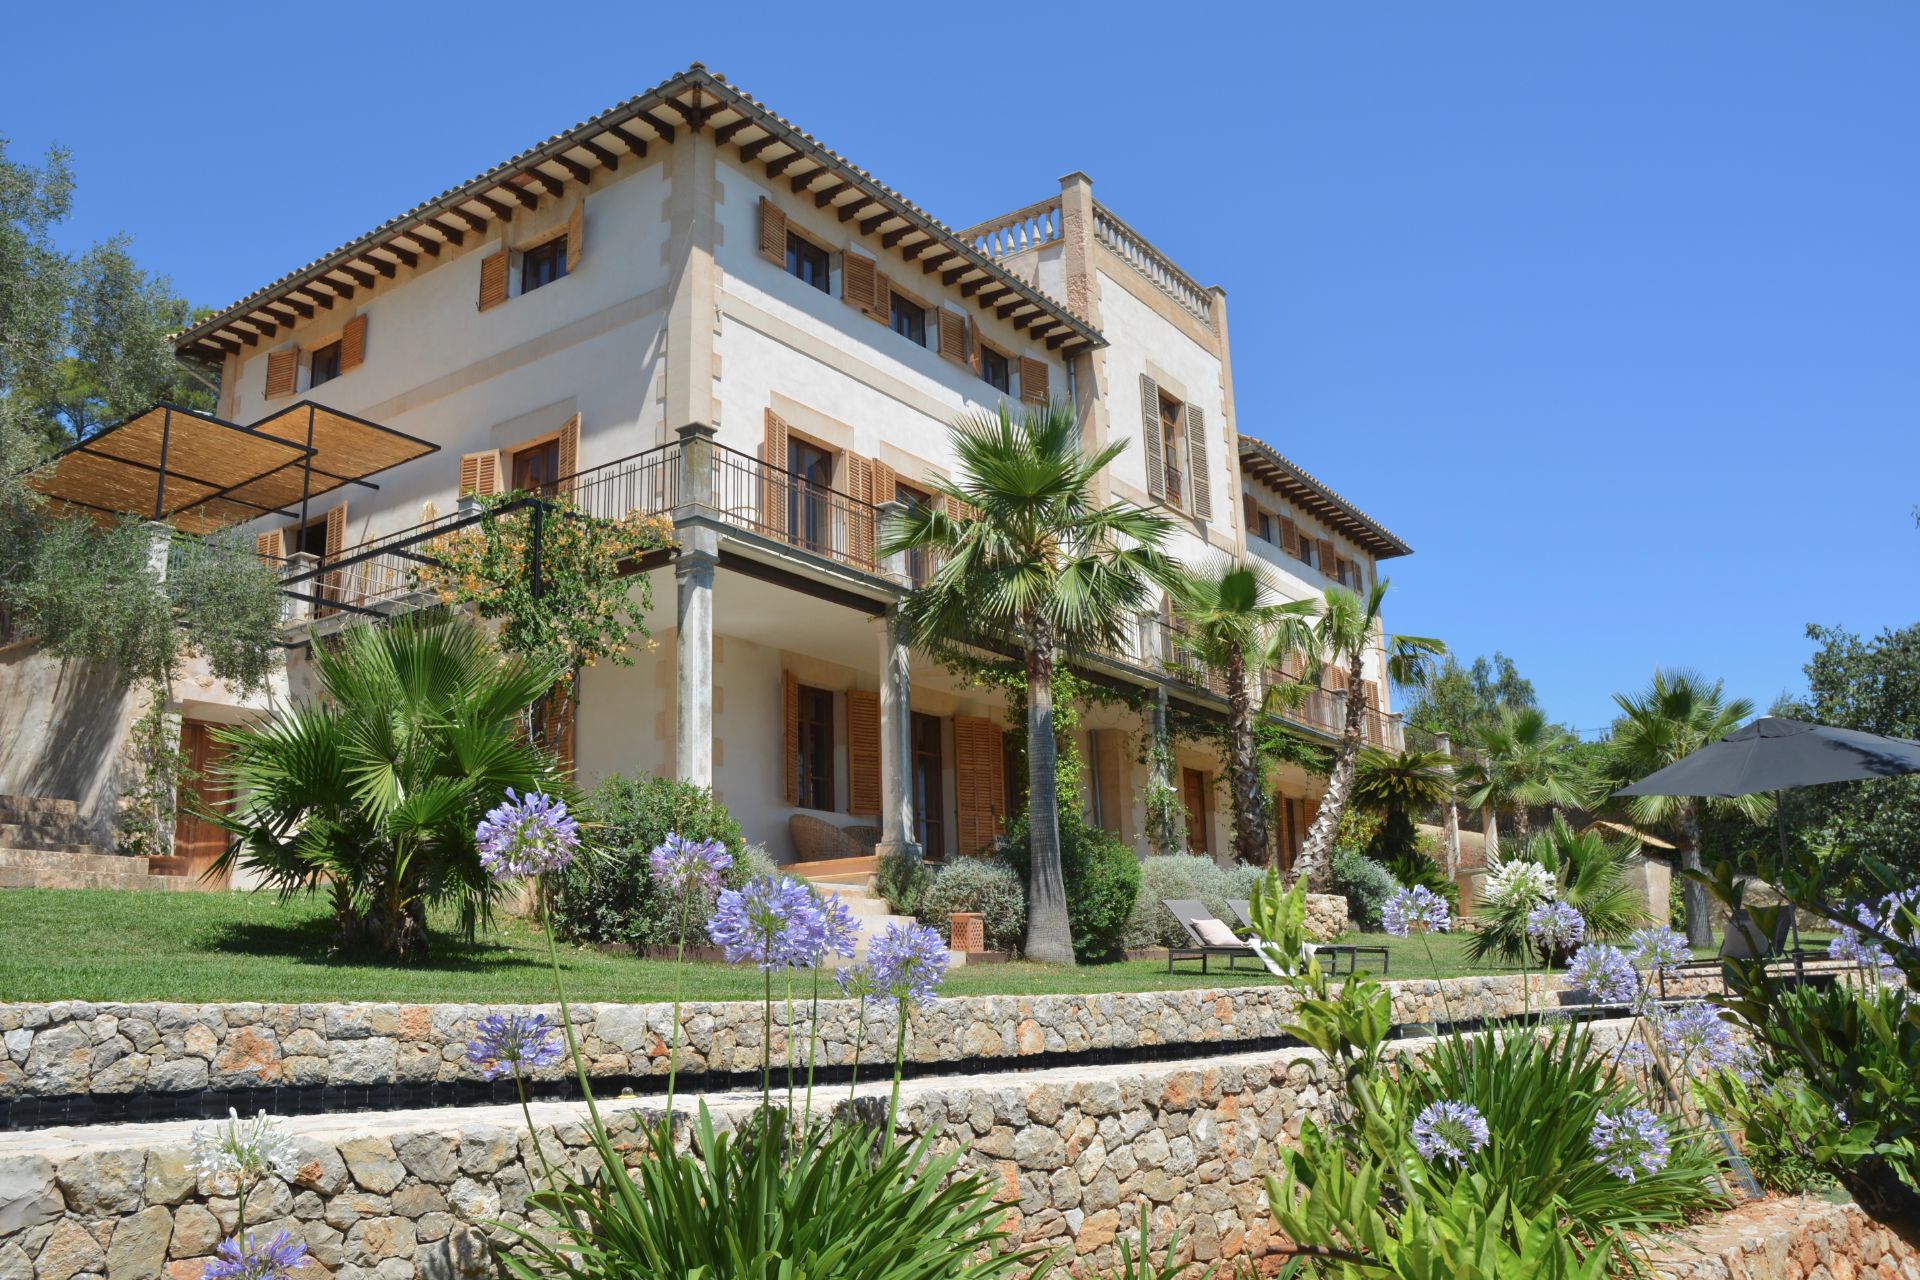 The Best Villas in Mallorca